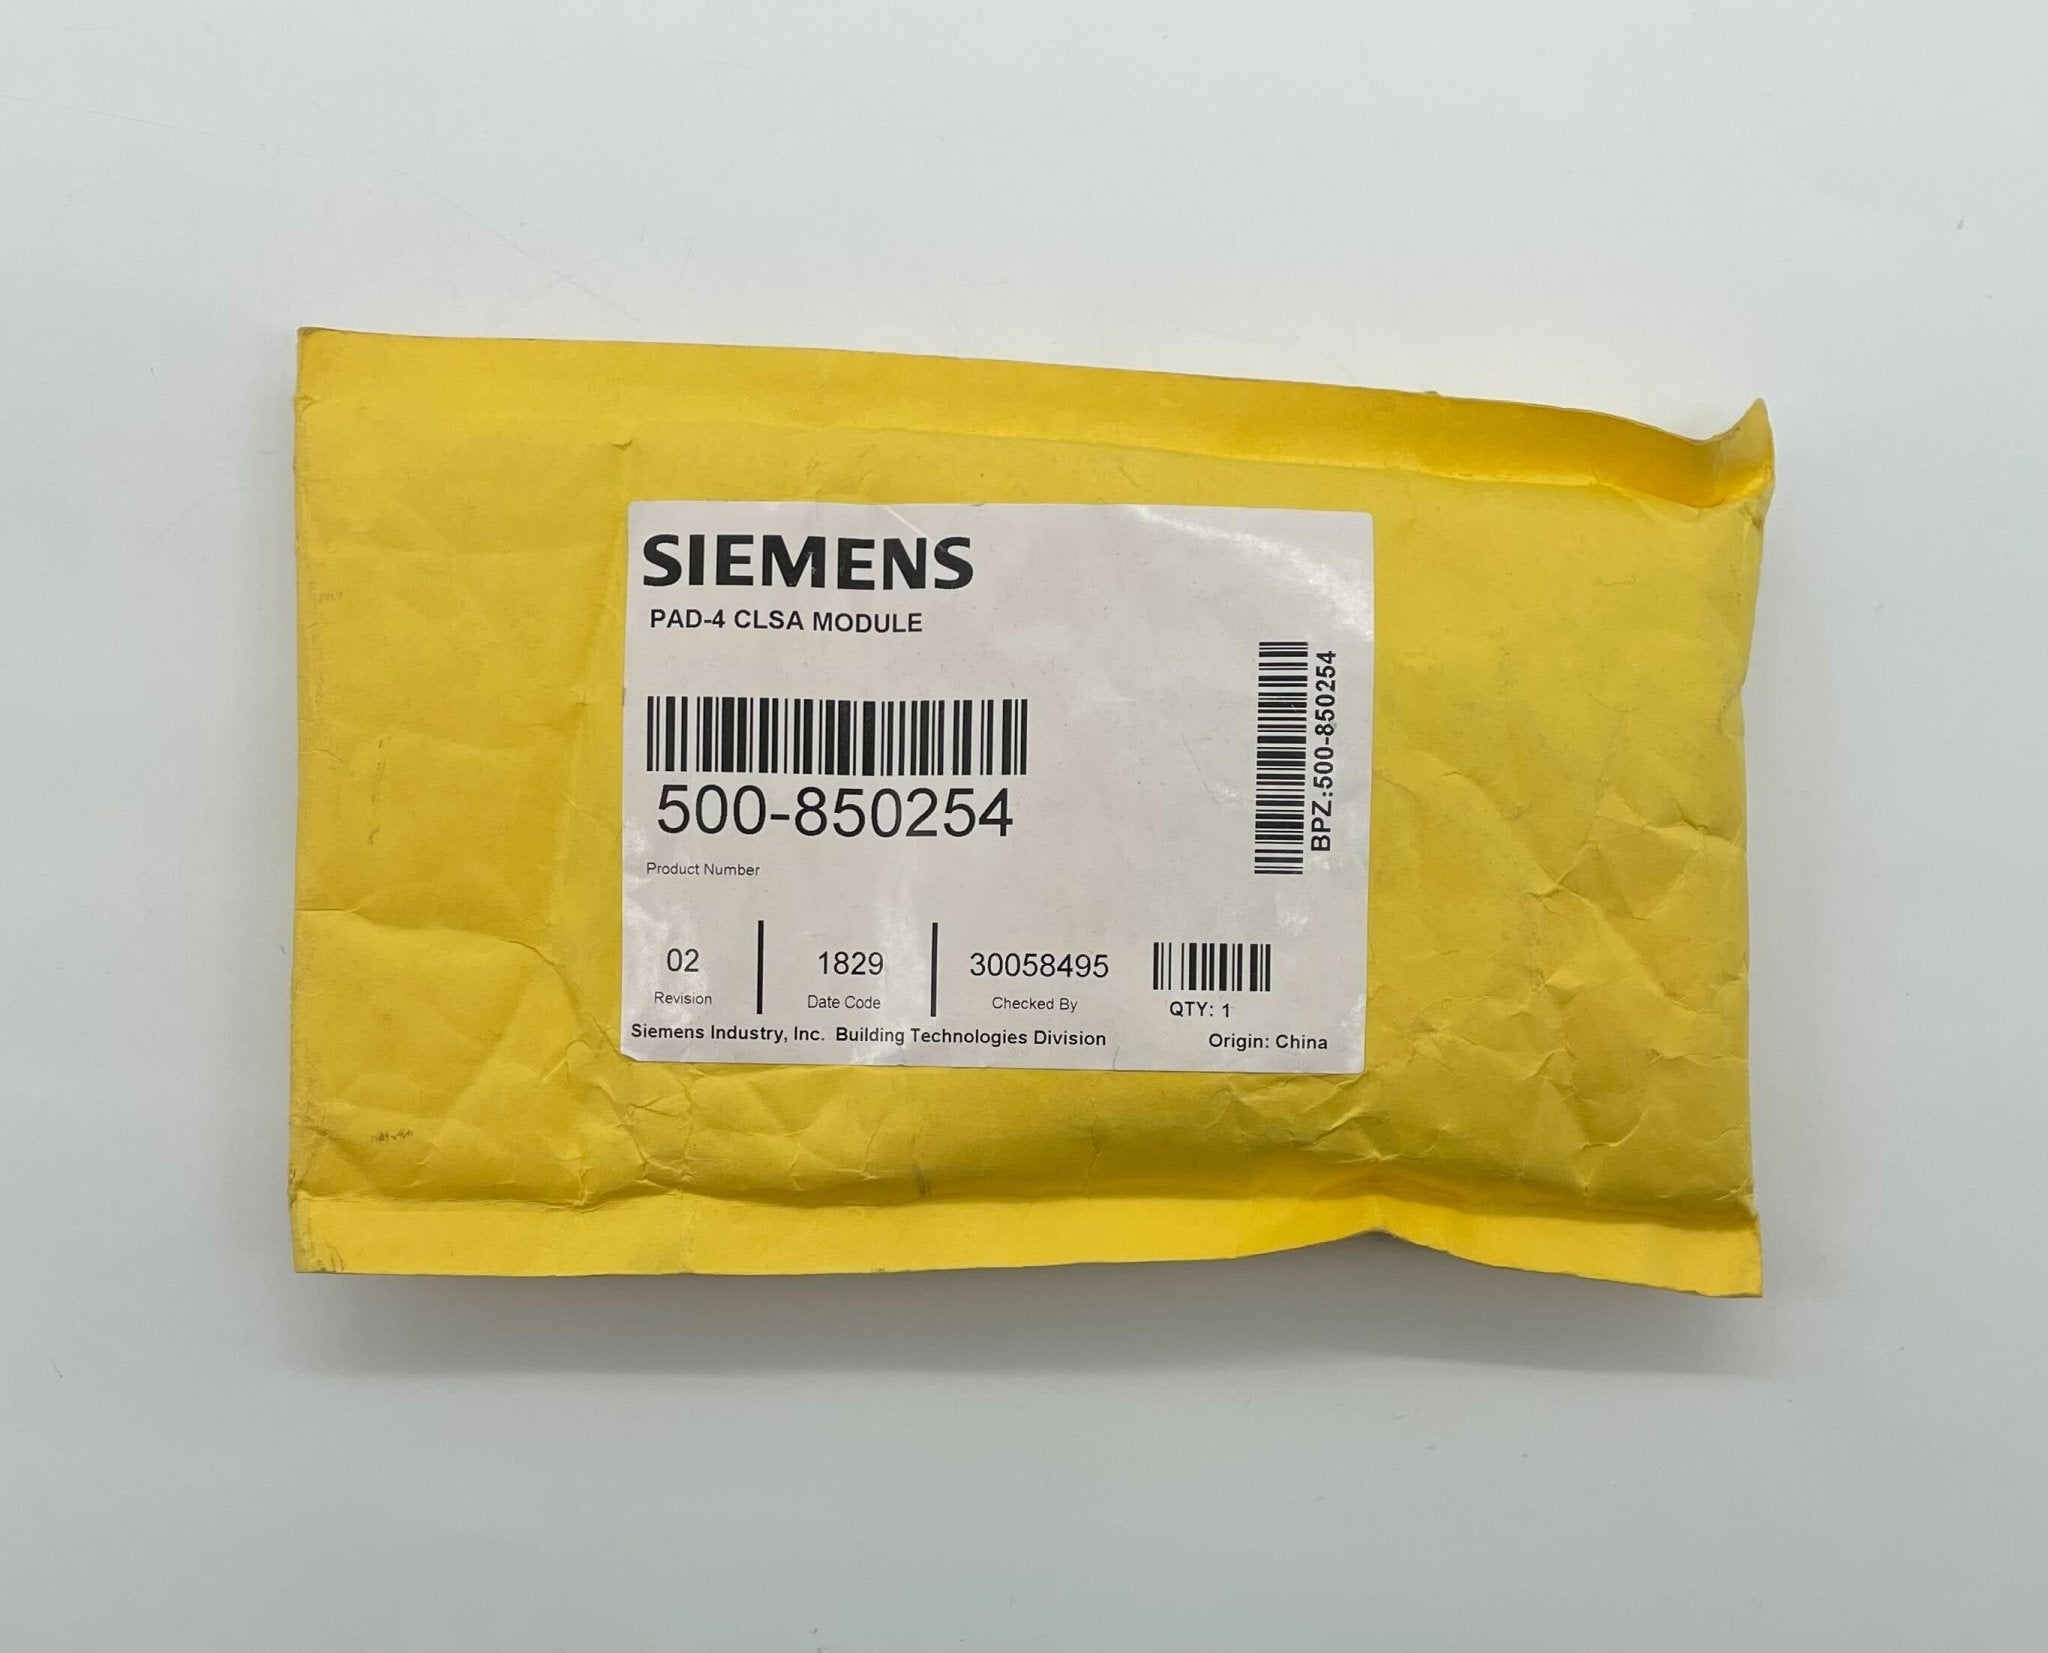 Siemens PAD-4-CLSA - The Fire Alarm Supplier